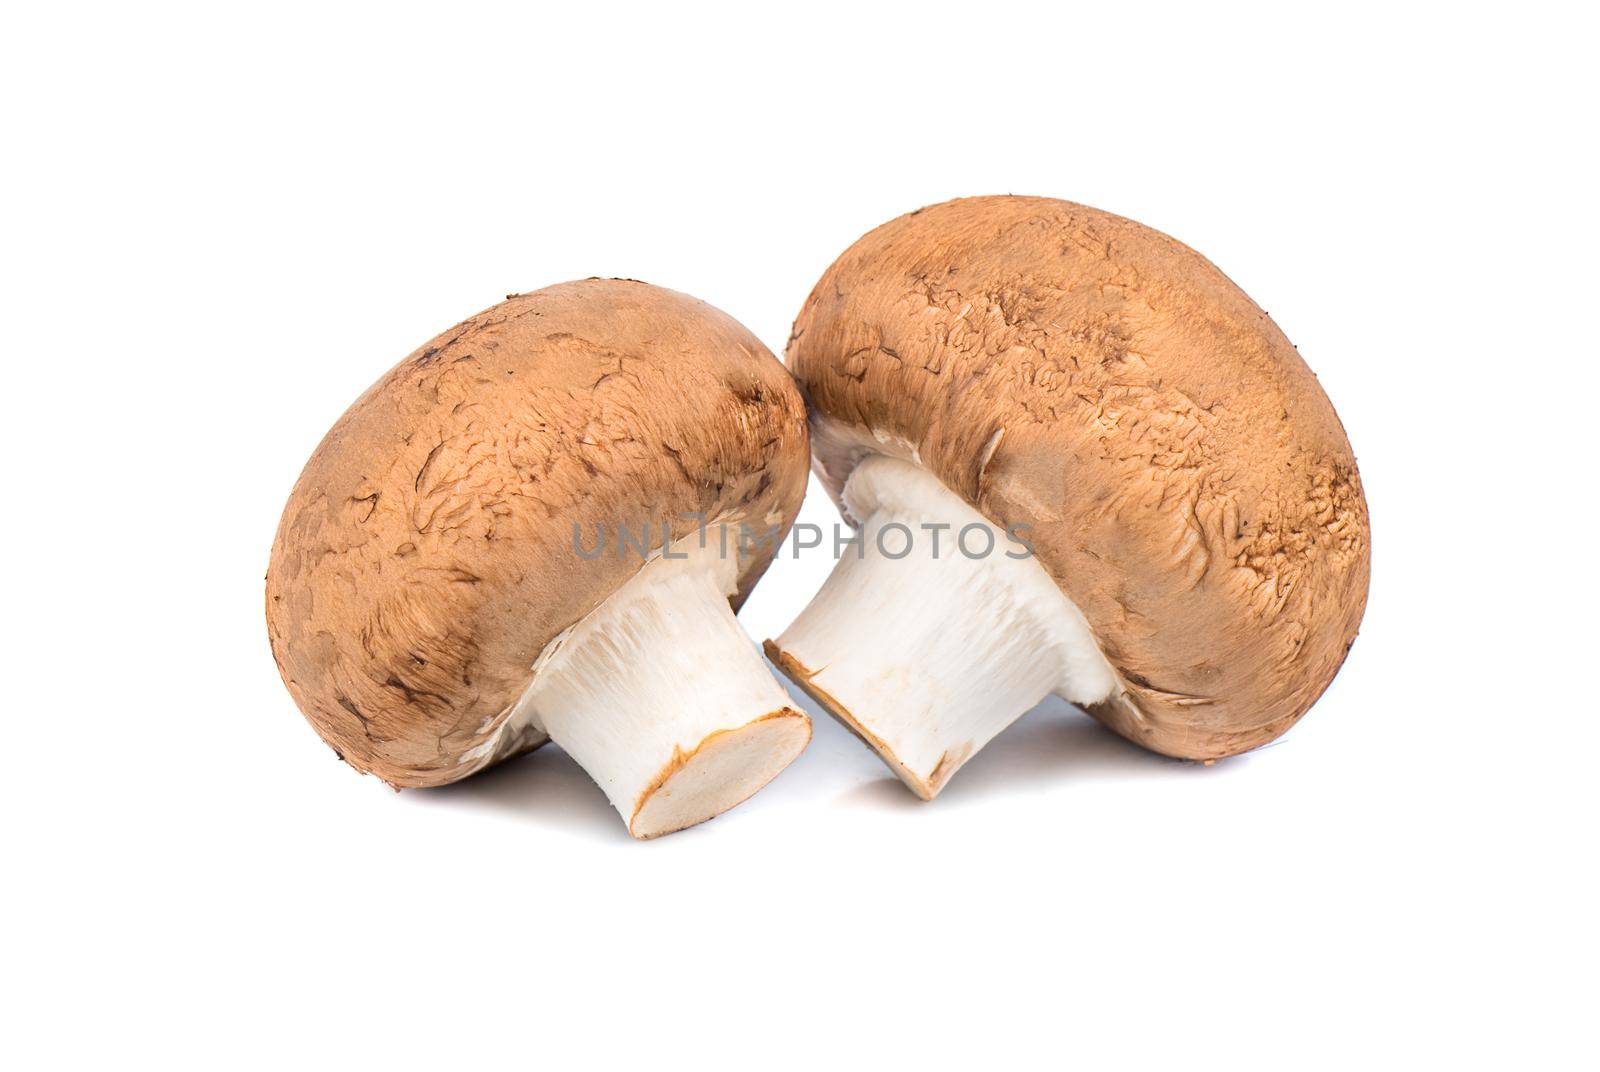 Two fresh royal champignon mushroom on a white background